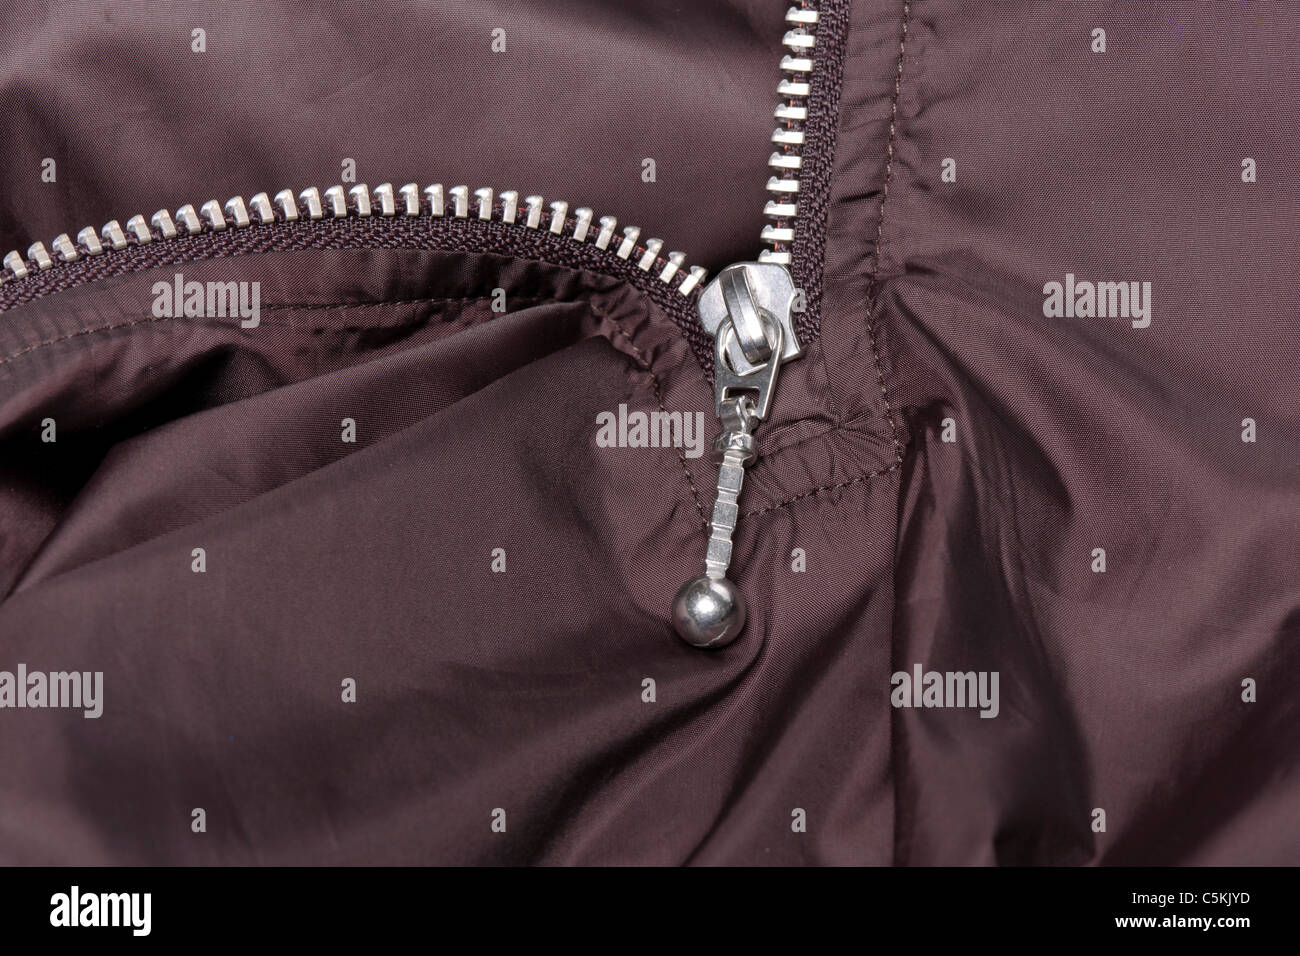 Adidas Sportswear Herren Overhead Windjacke Regenjacke in braunen Nylon 1/4 Zip, Hals über Kopf Jacke. Reißverschluss detail Stockfoto